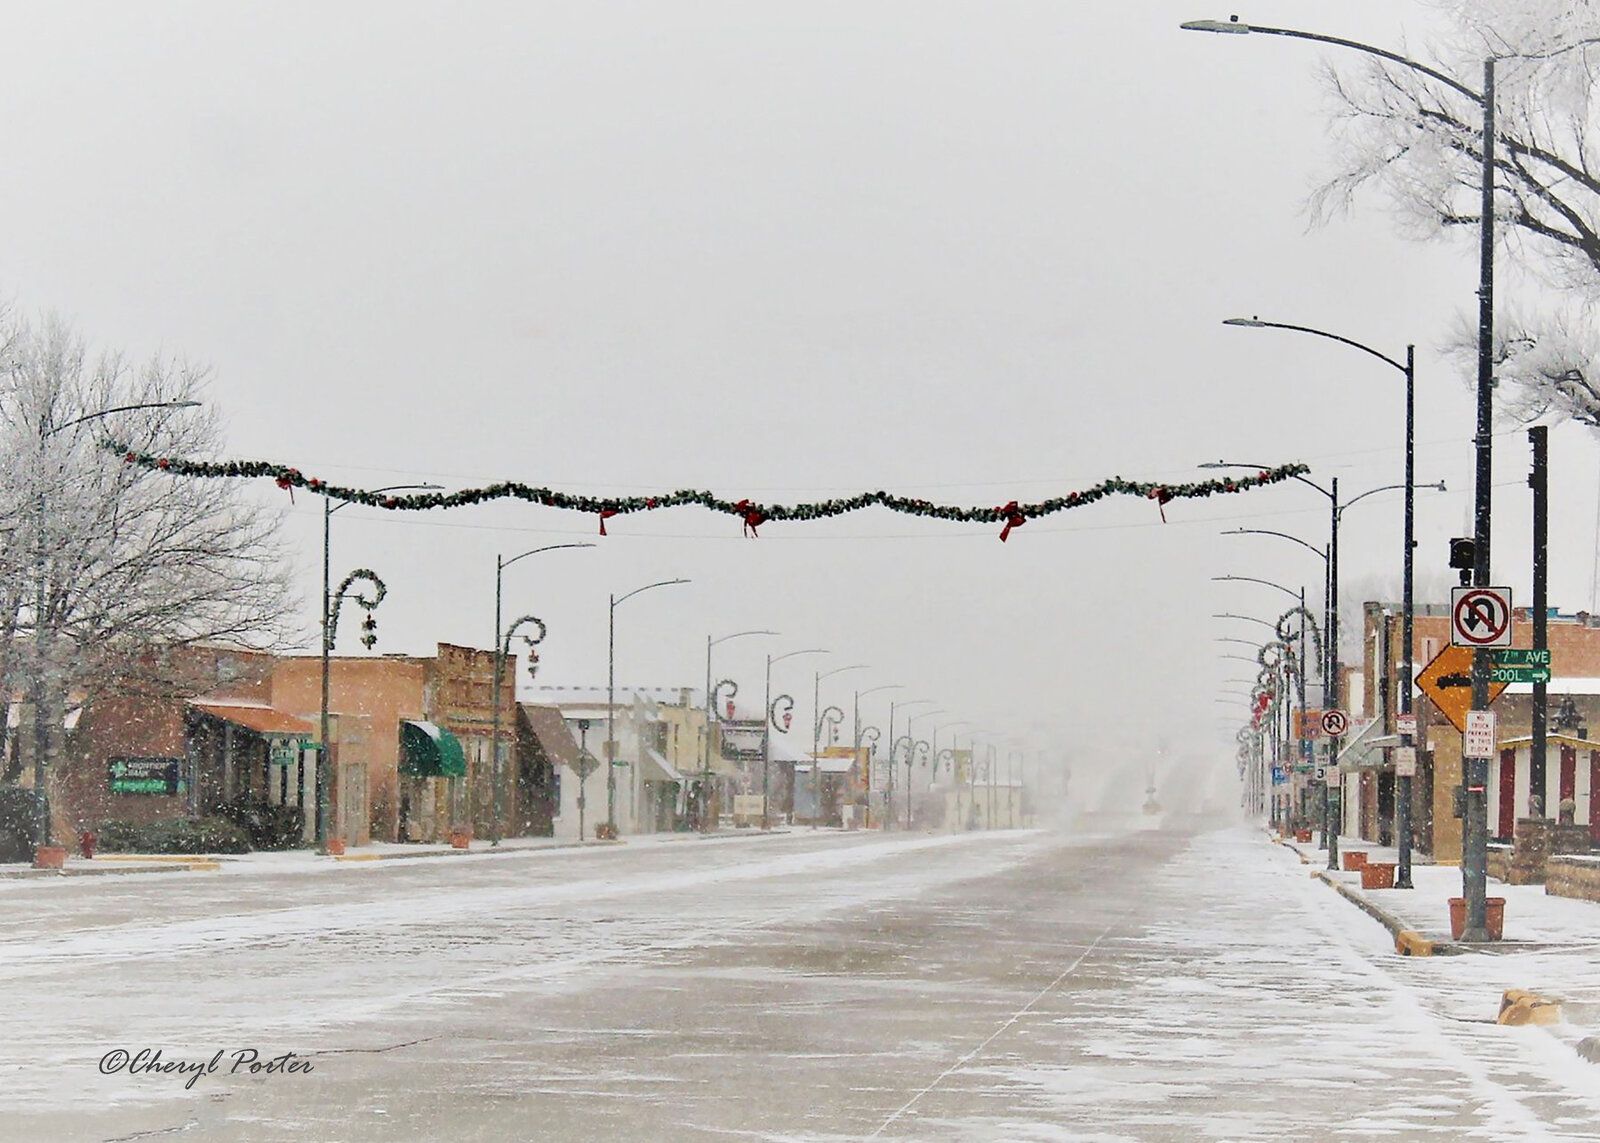 Springfield Main Street at Christmas time